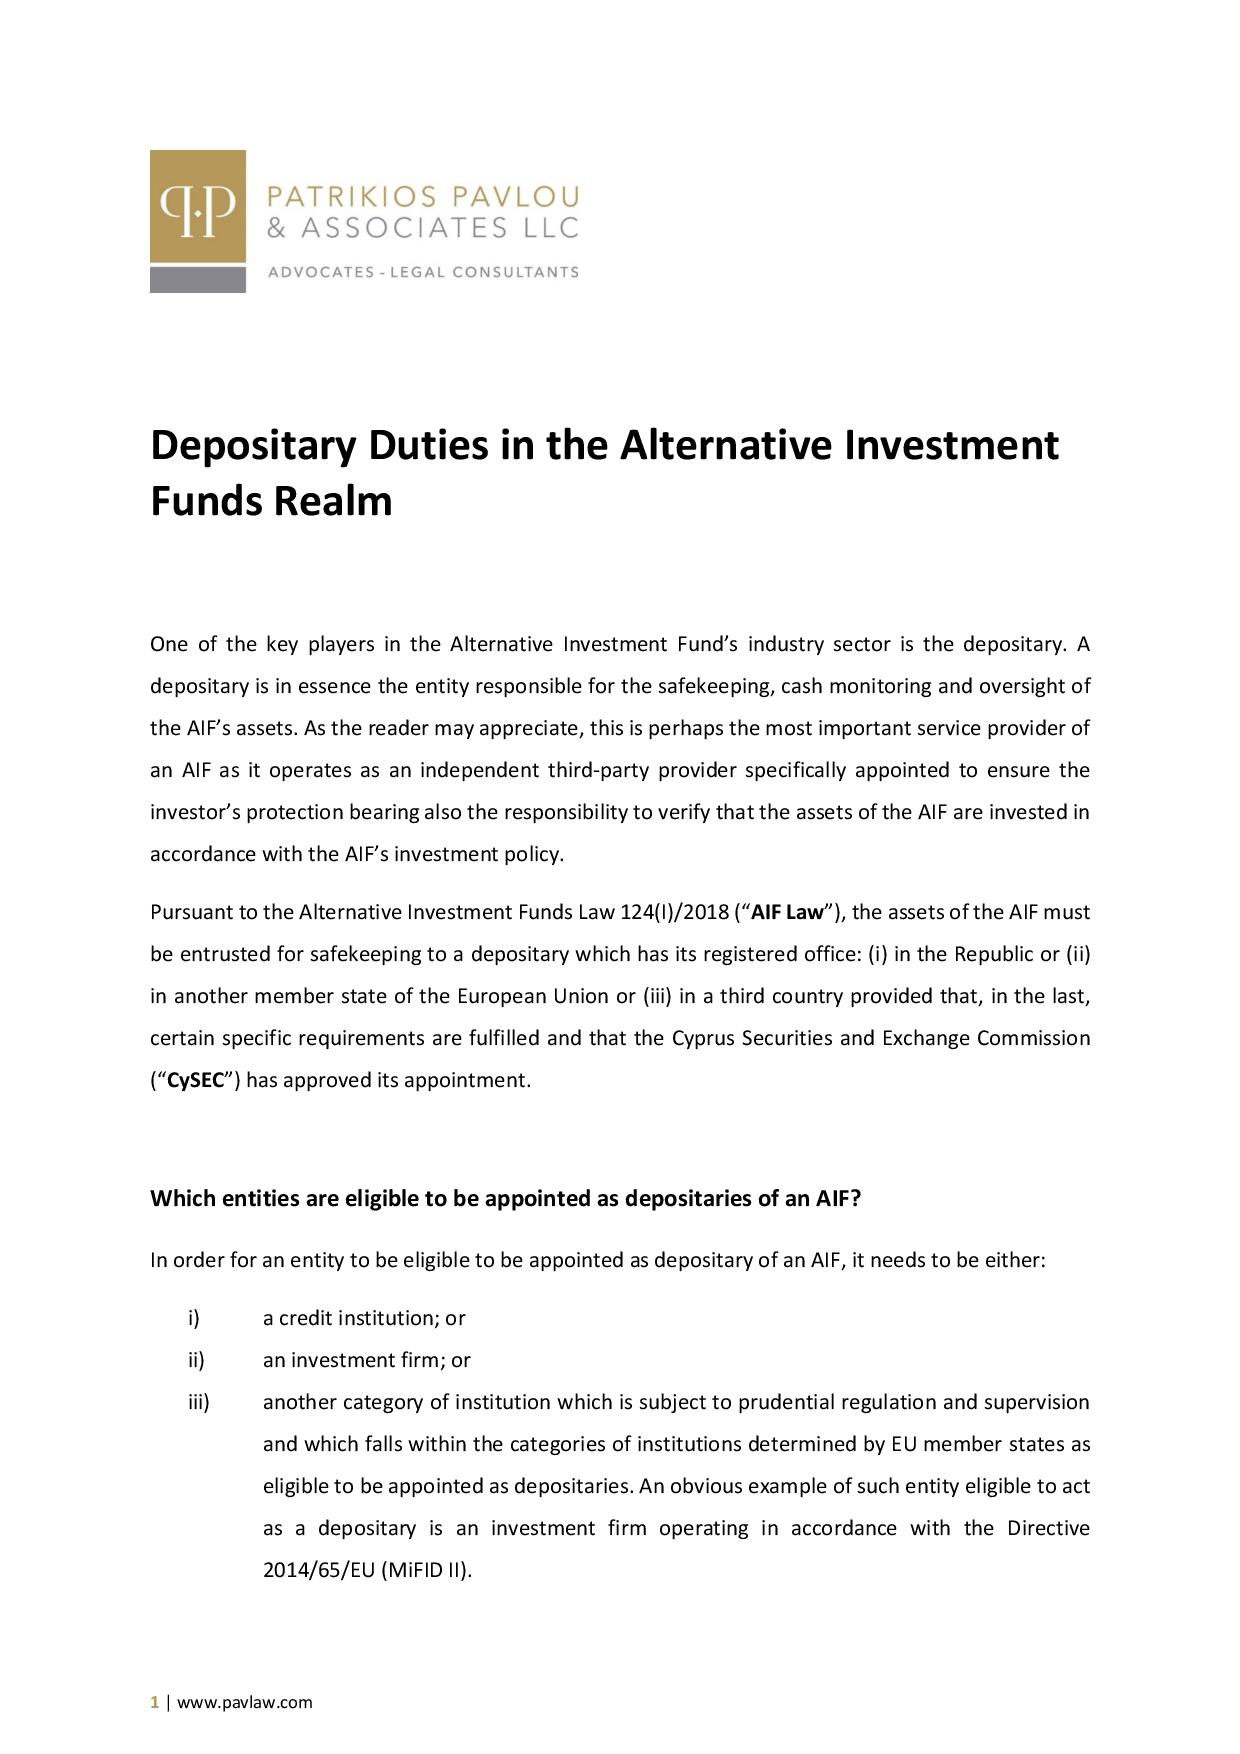 Patrikios Pavlou & Associates LLC: Depositary Duties in the Alternative Investment Funds Realm